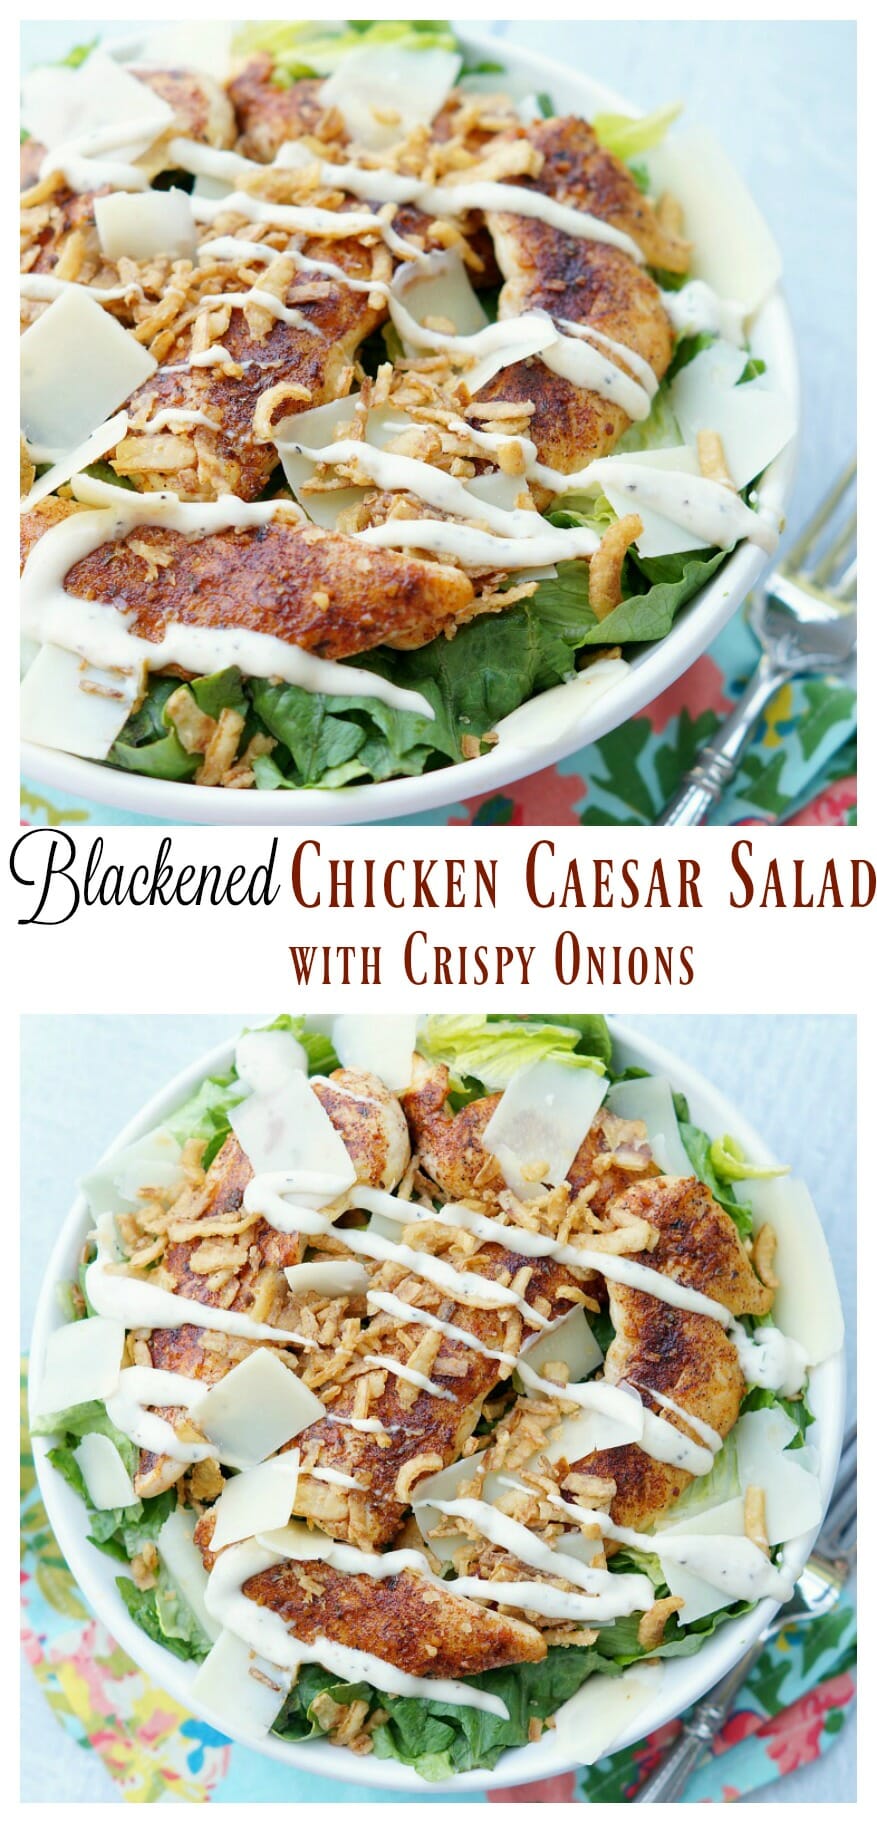 Blackened Chicken Caesar Salad with Crispy Onions